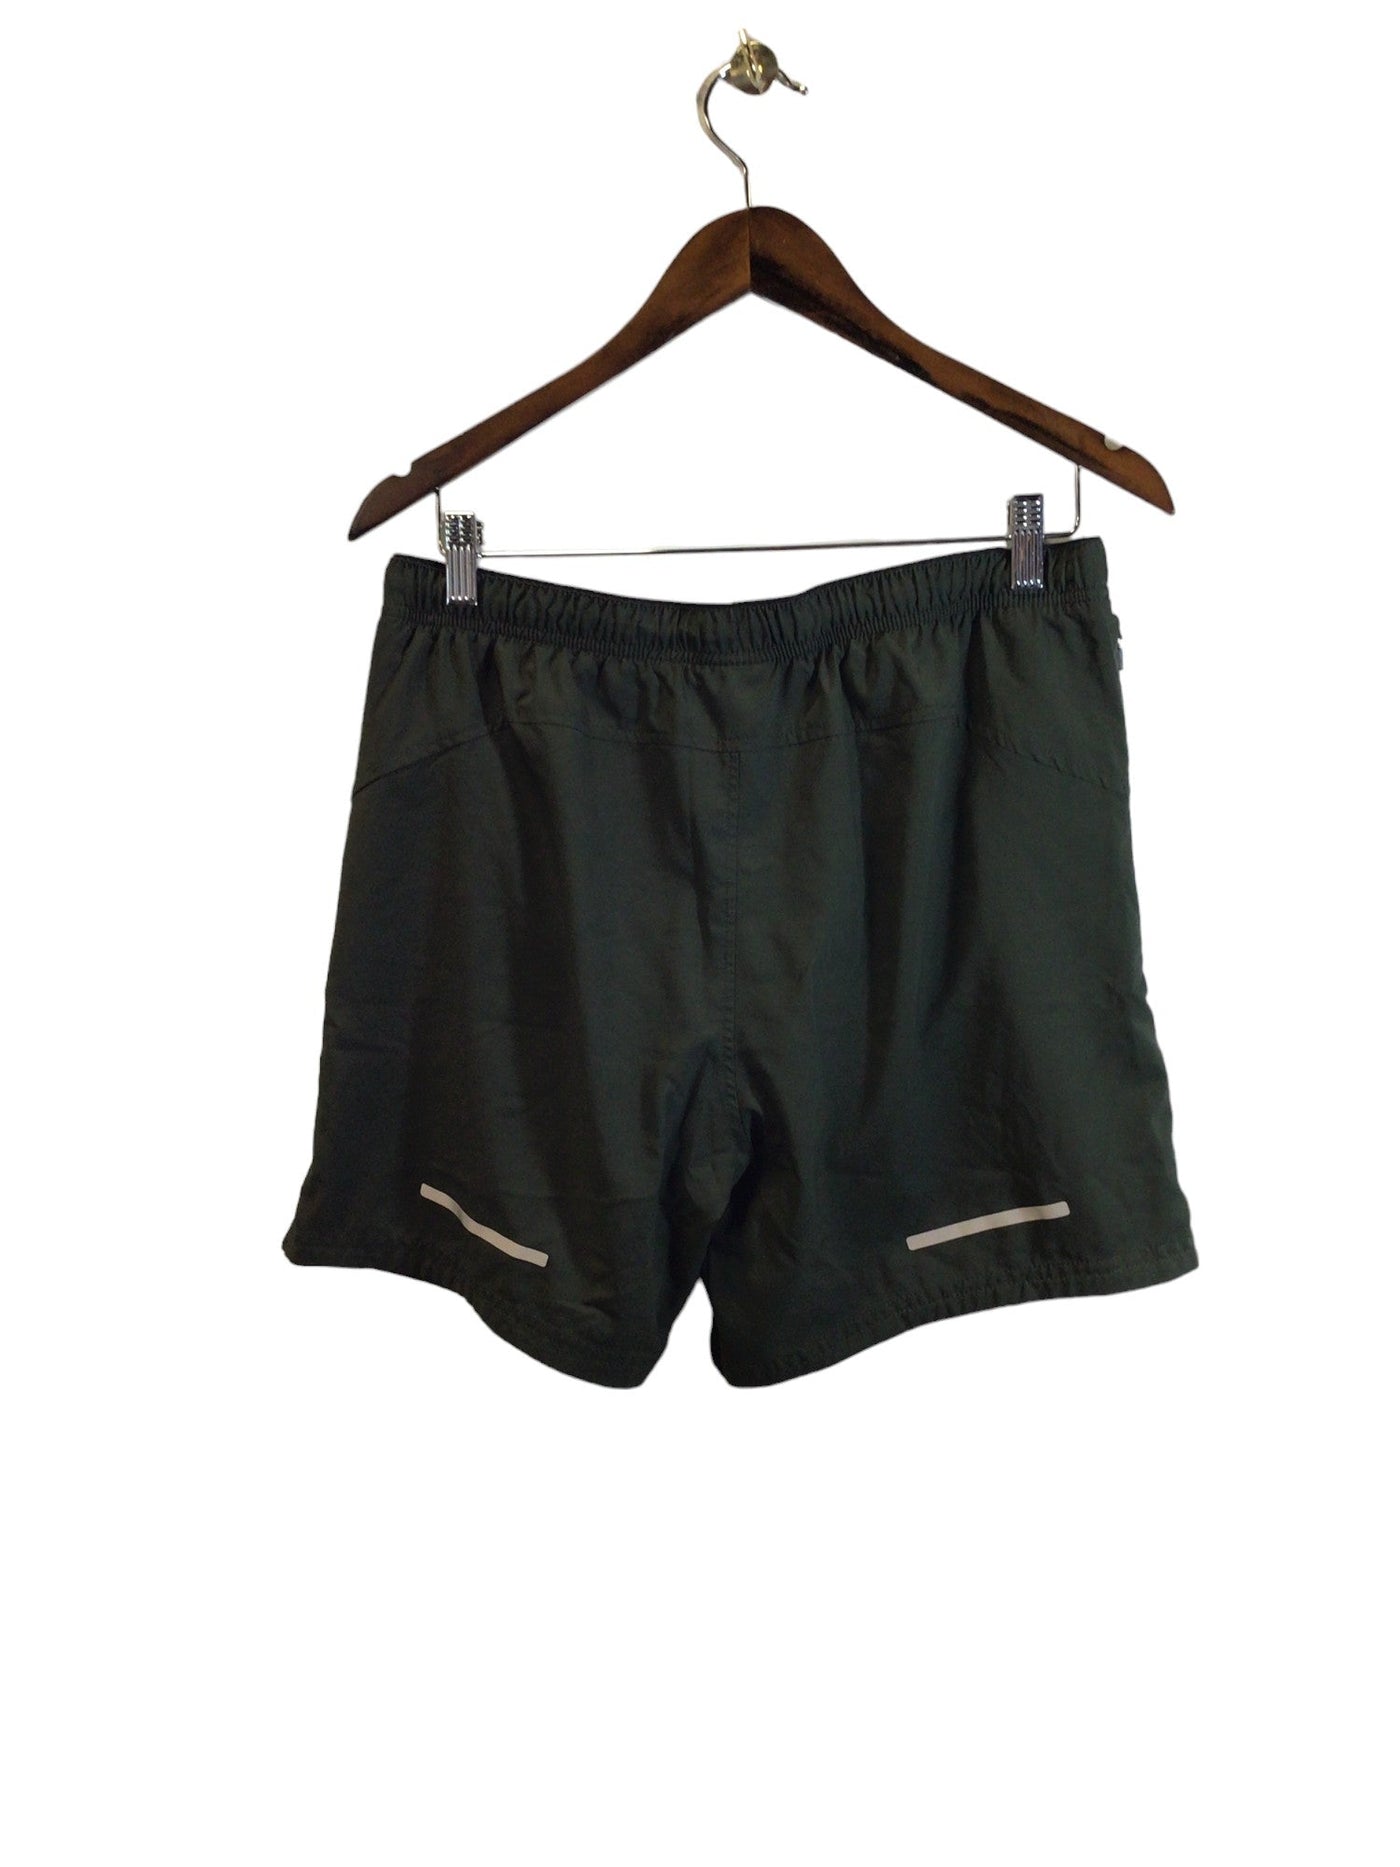 H&M Women Activewear Shorts & Skirts Regular fit in Green - Size M | 12.99 $ KOOP